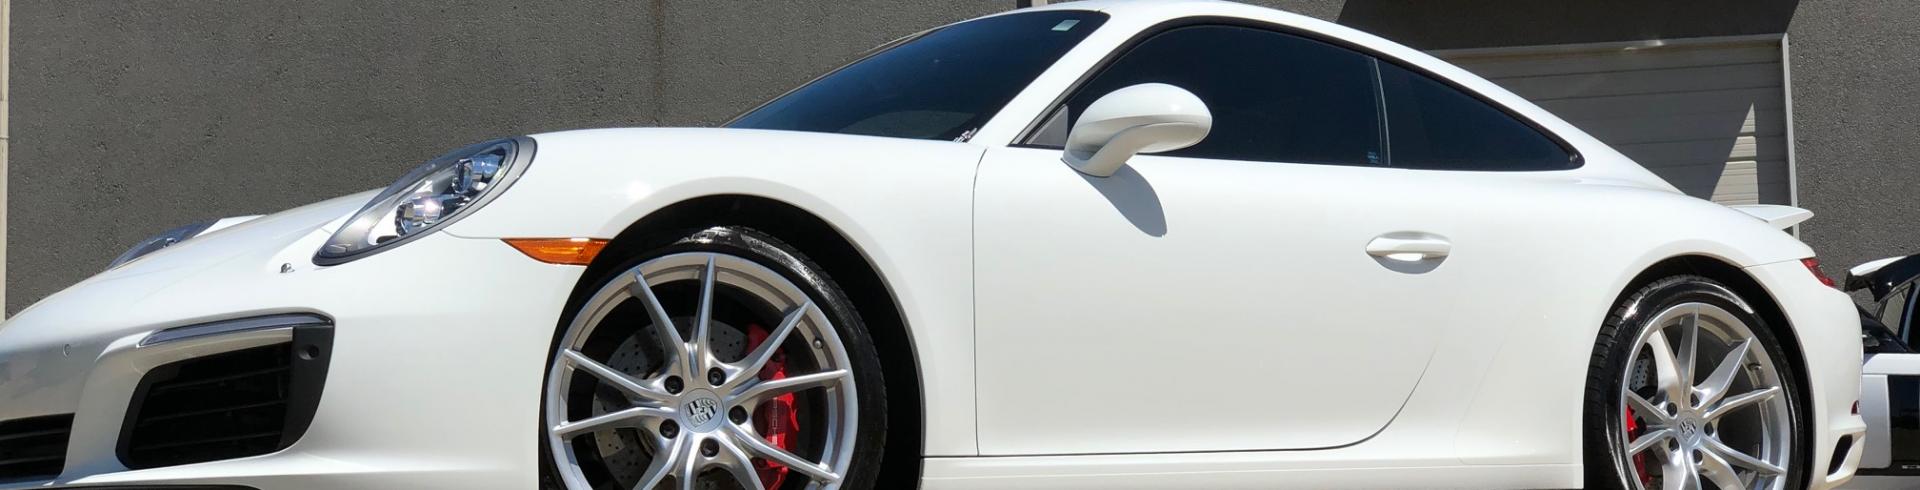 shiny white sports car